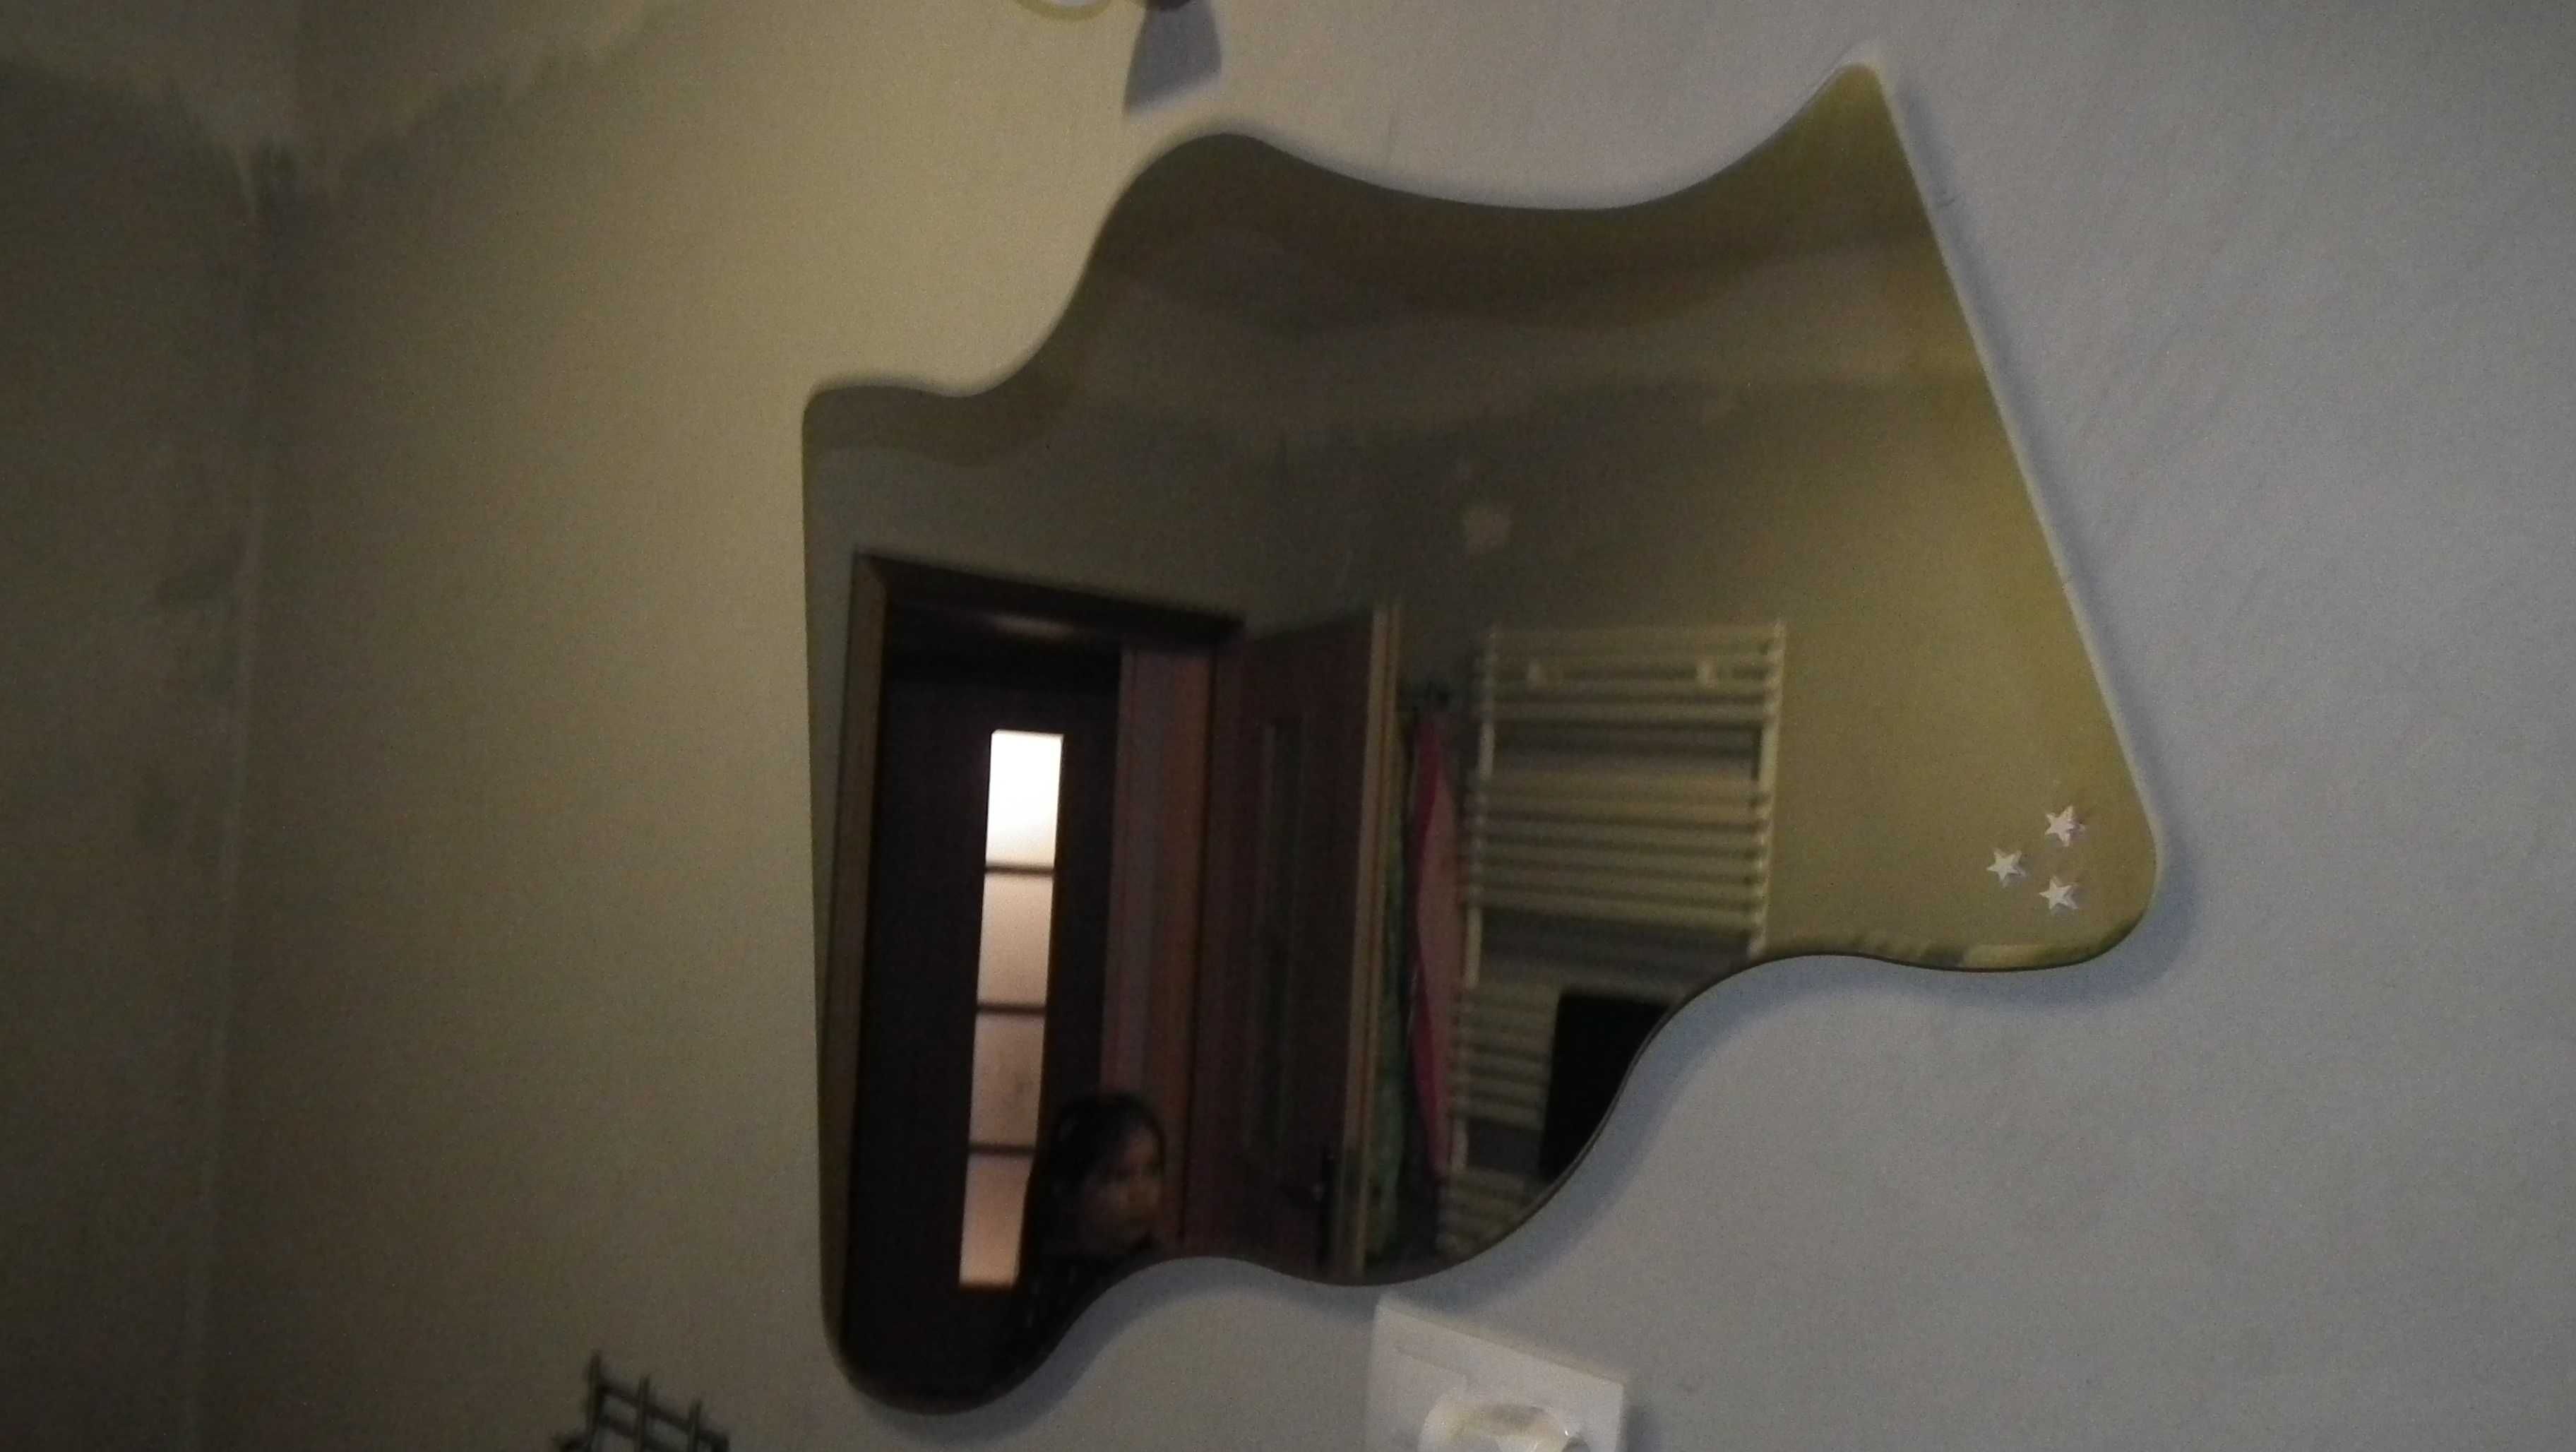 lustro łazienkowe